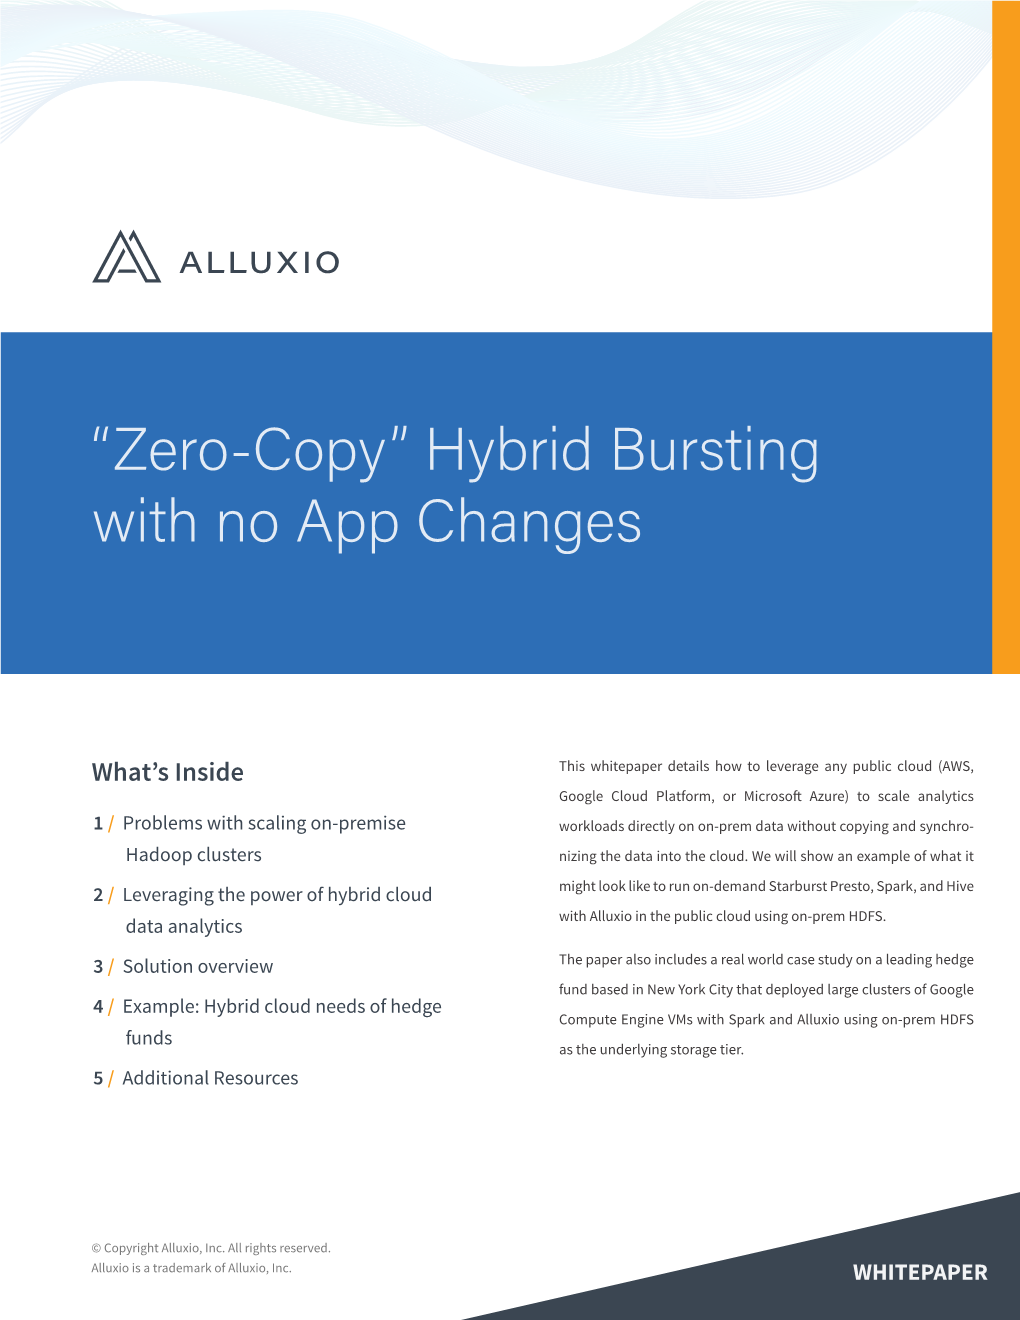 “Zero-Copy” Hybrid Bursting with No App Changes